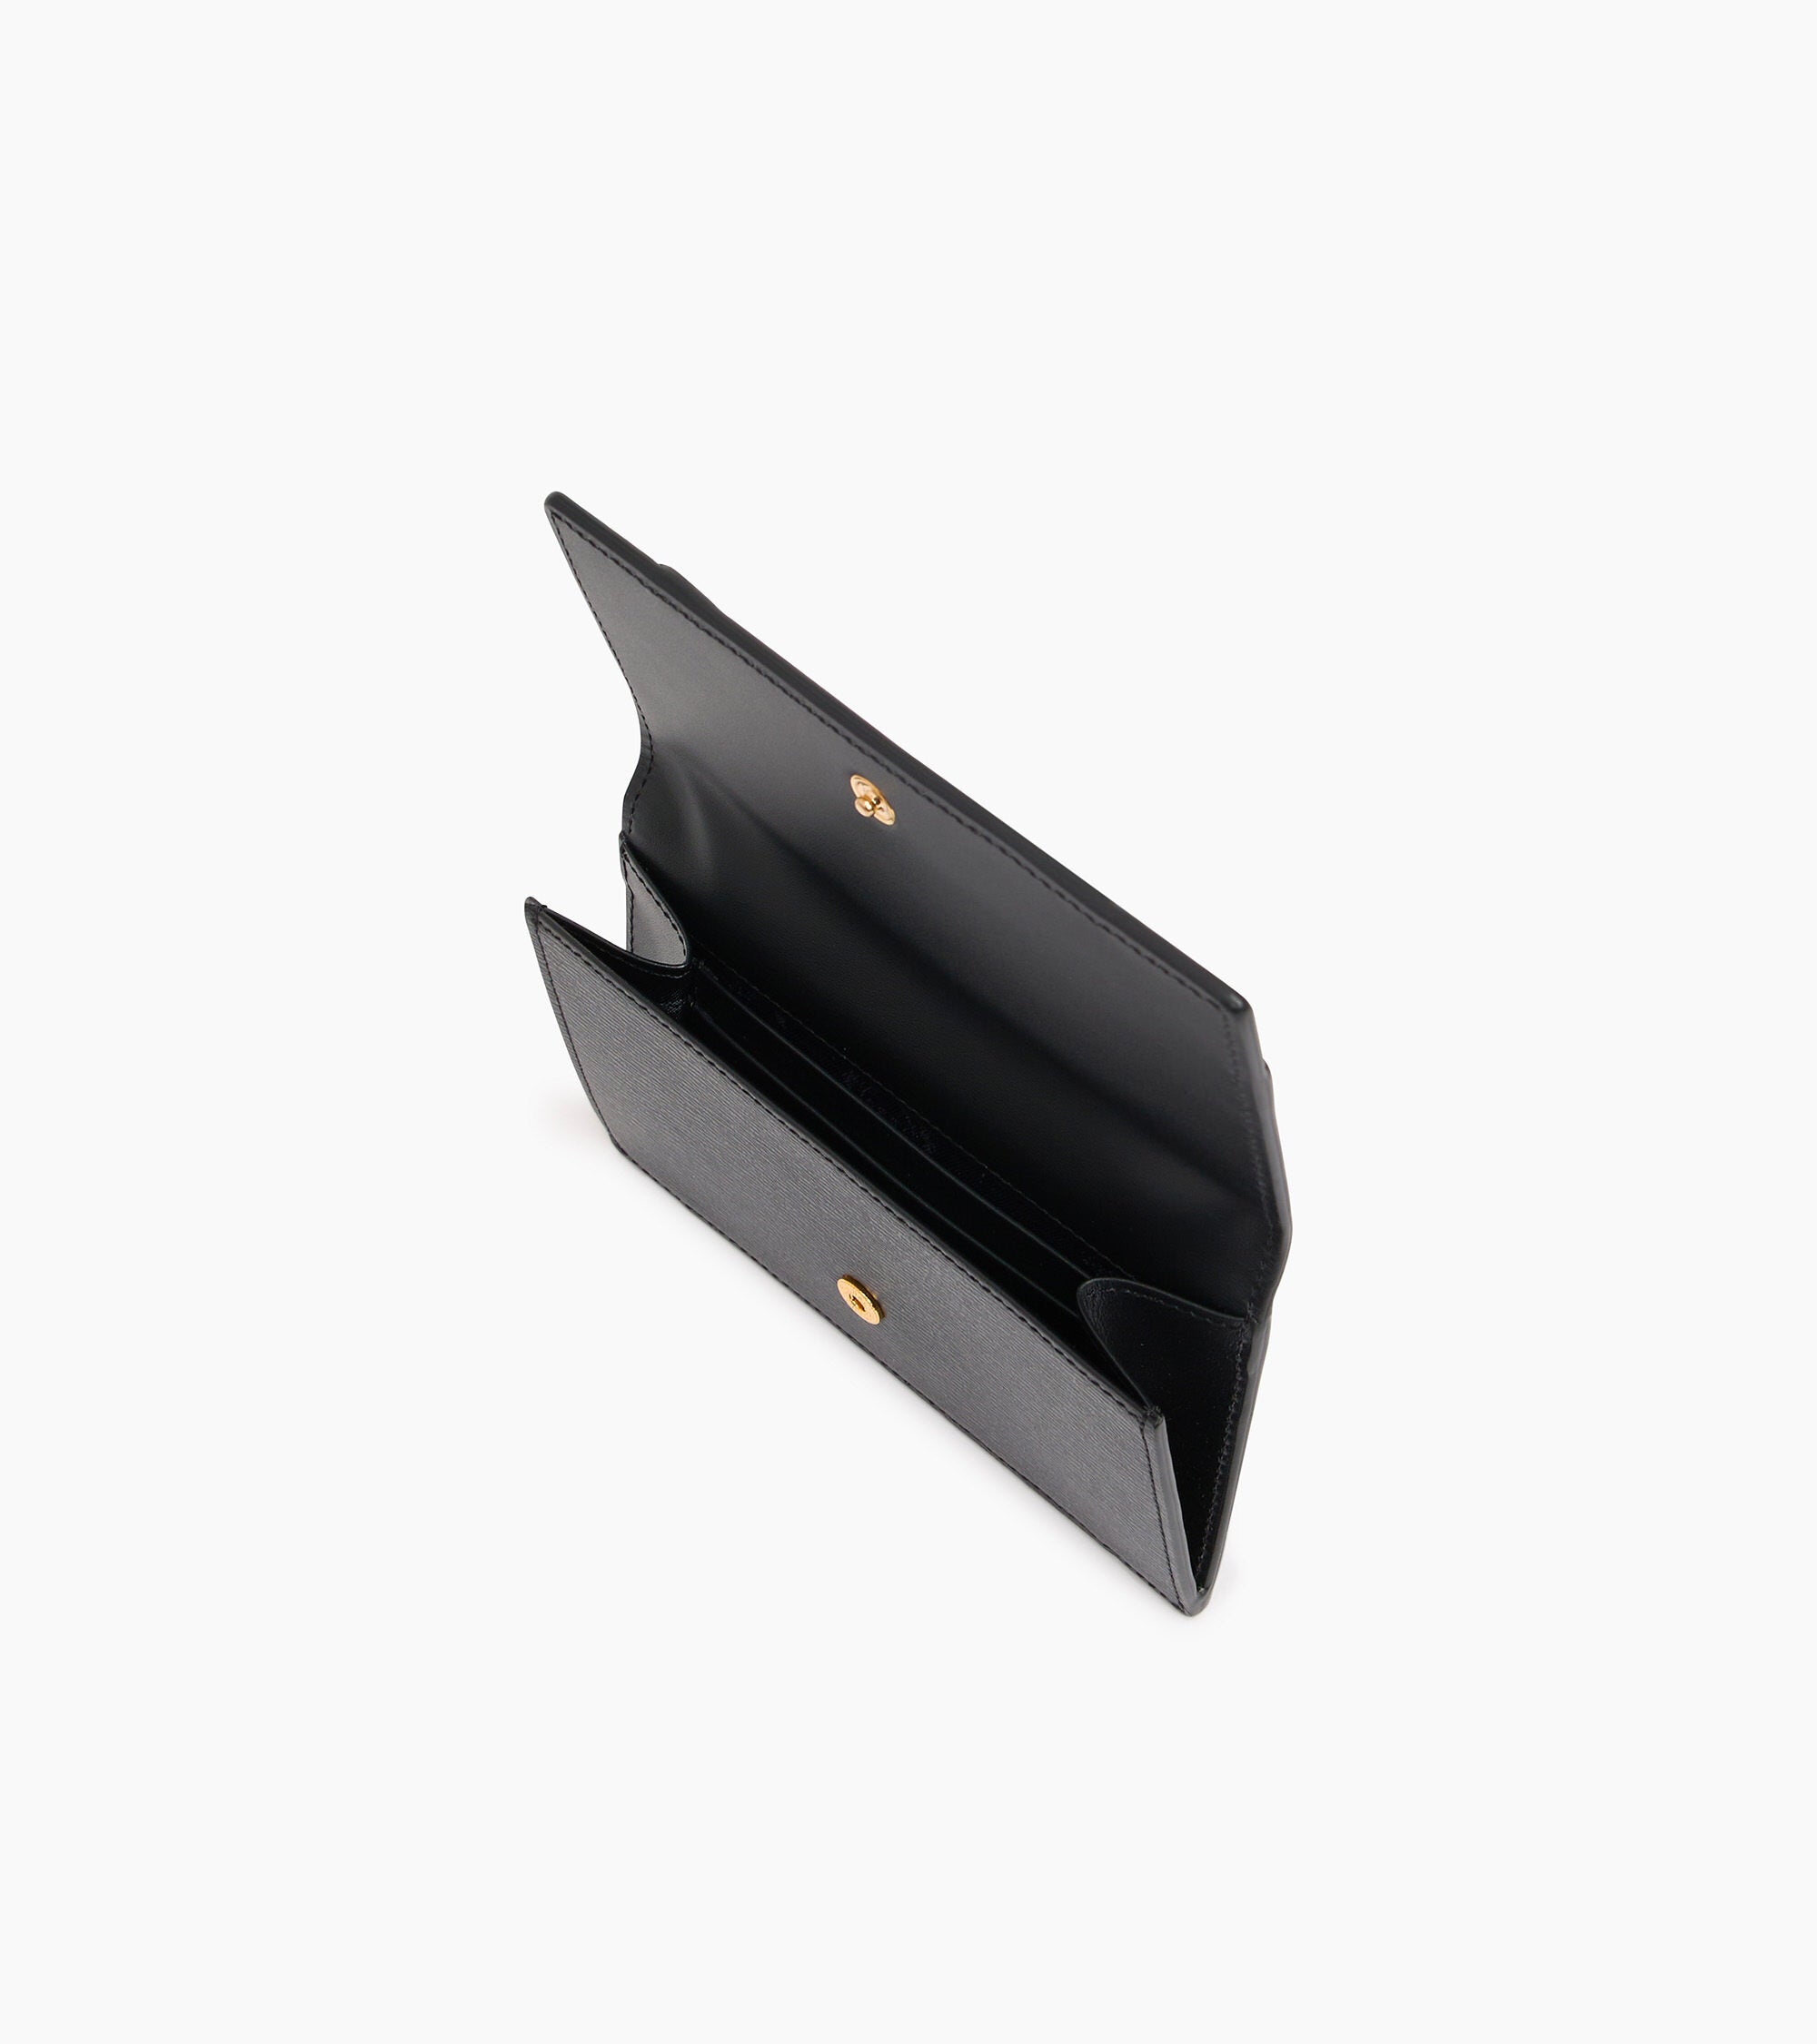 Naya flap card case in cork effect leather